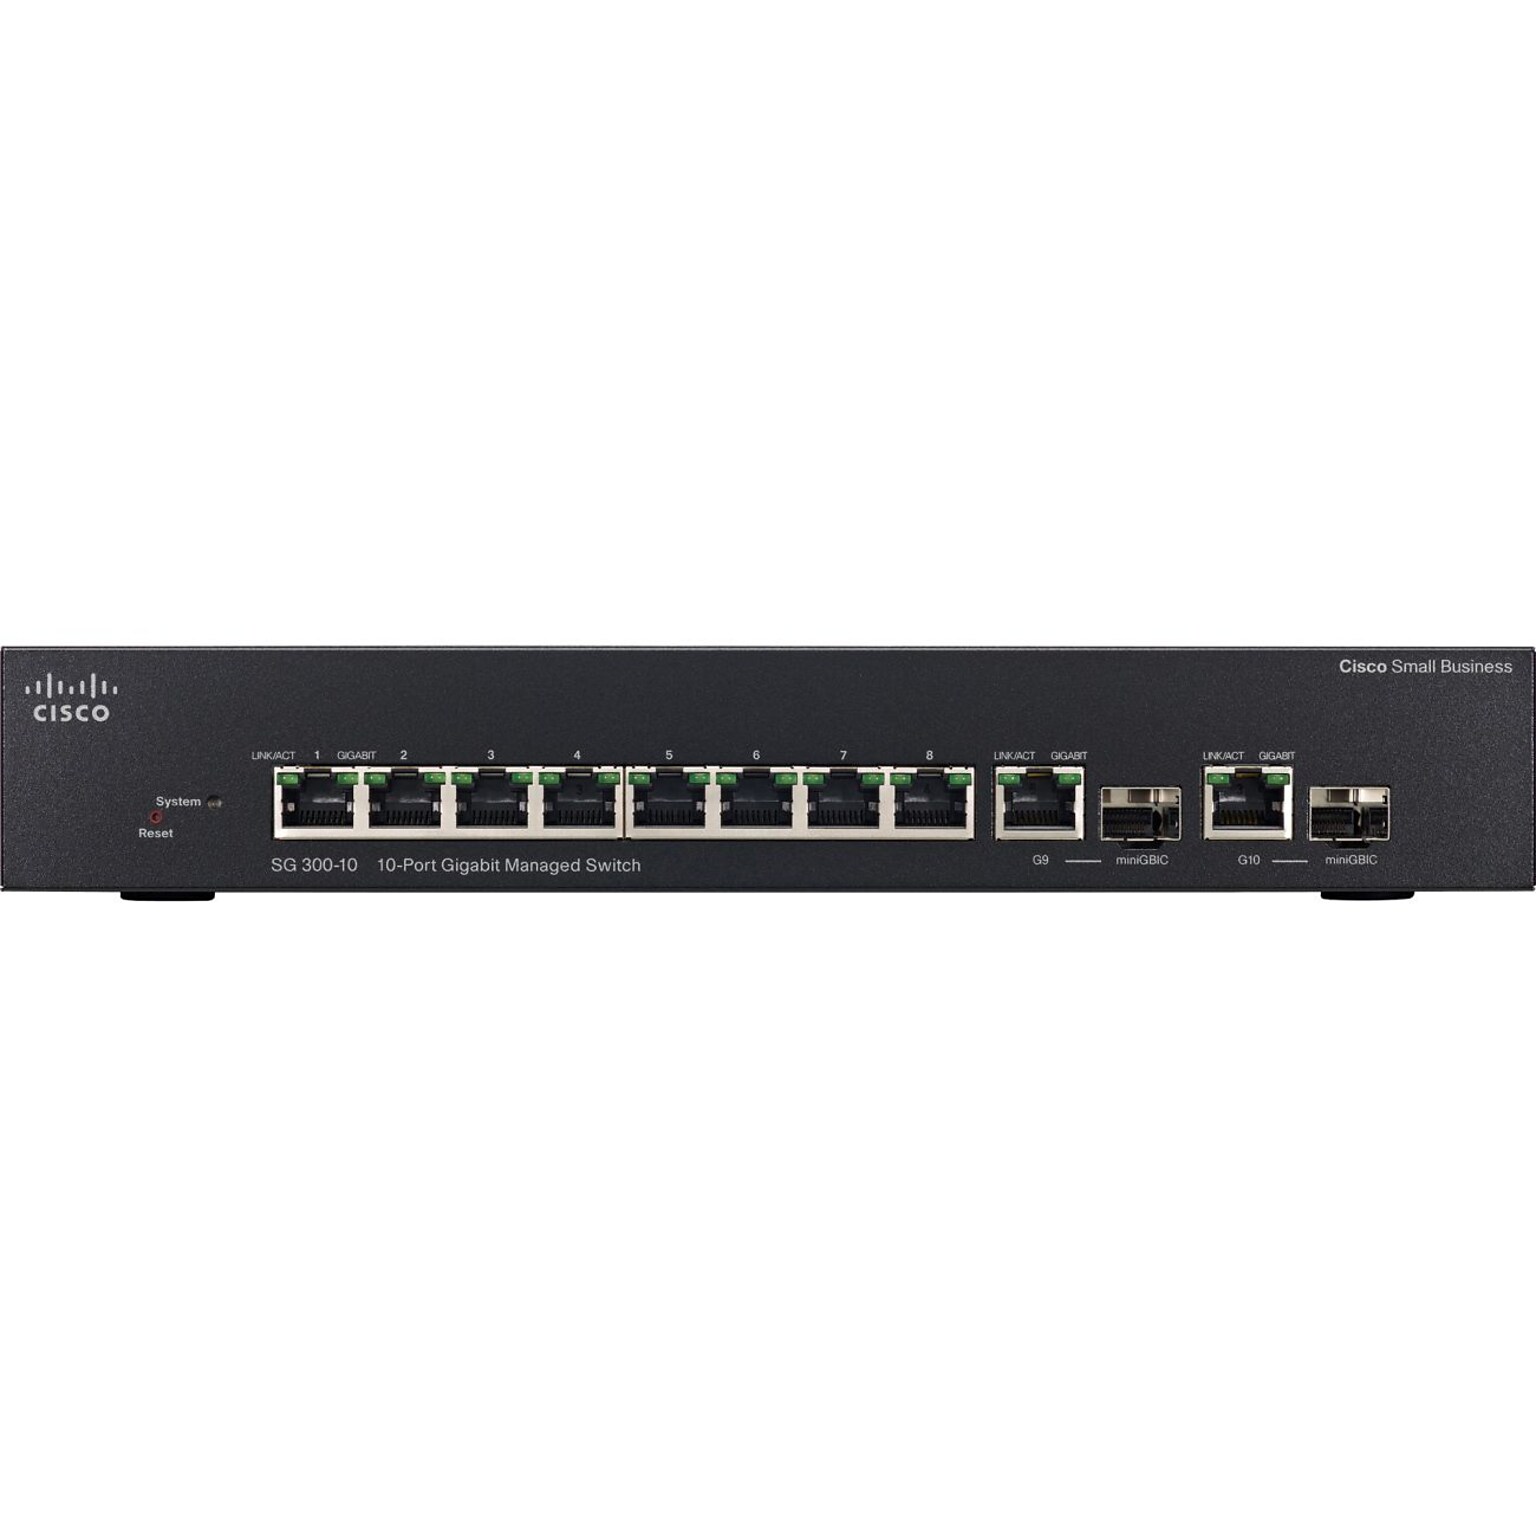 Linksys™ 24 Port Gigabit Ethernet Switch (LGS124)